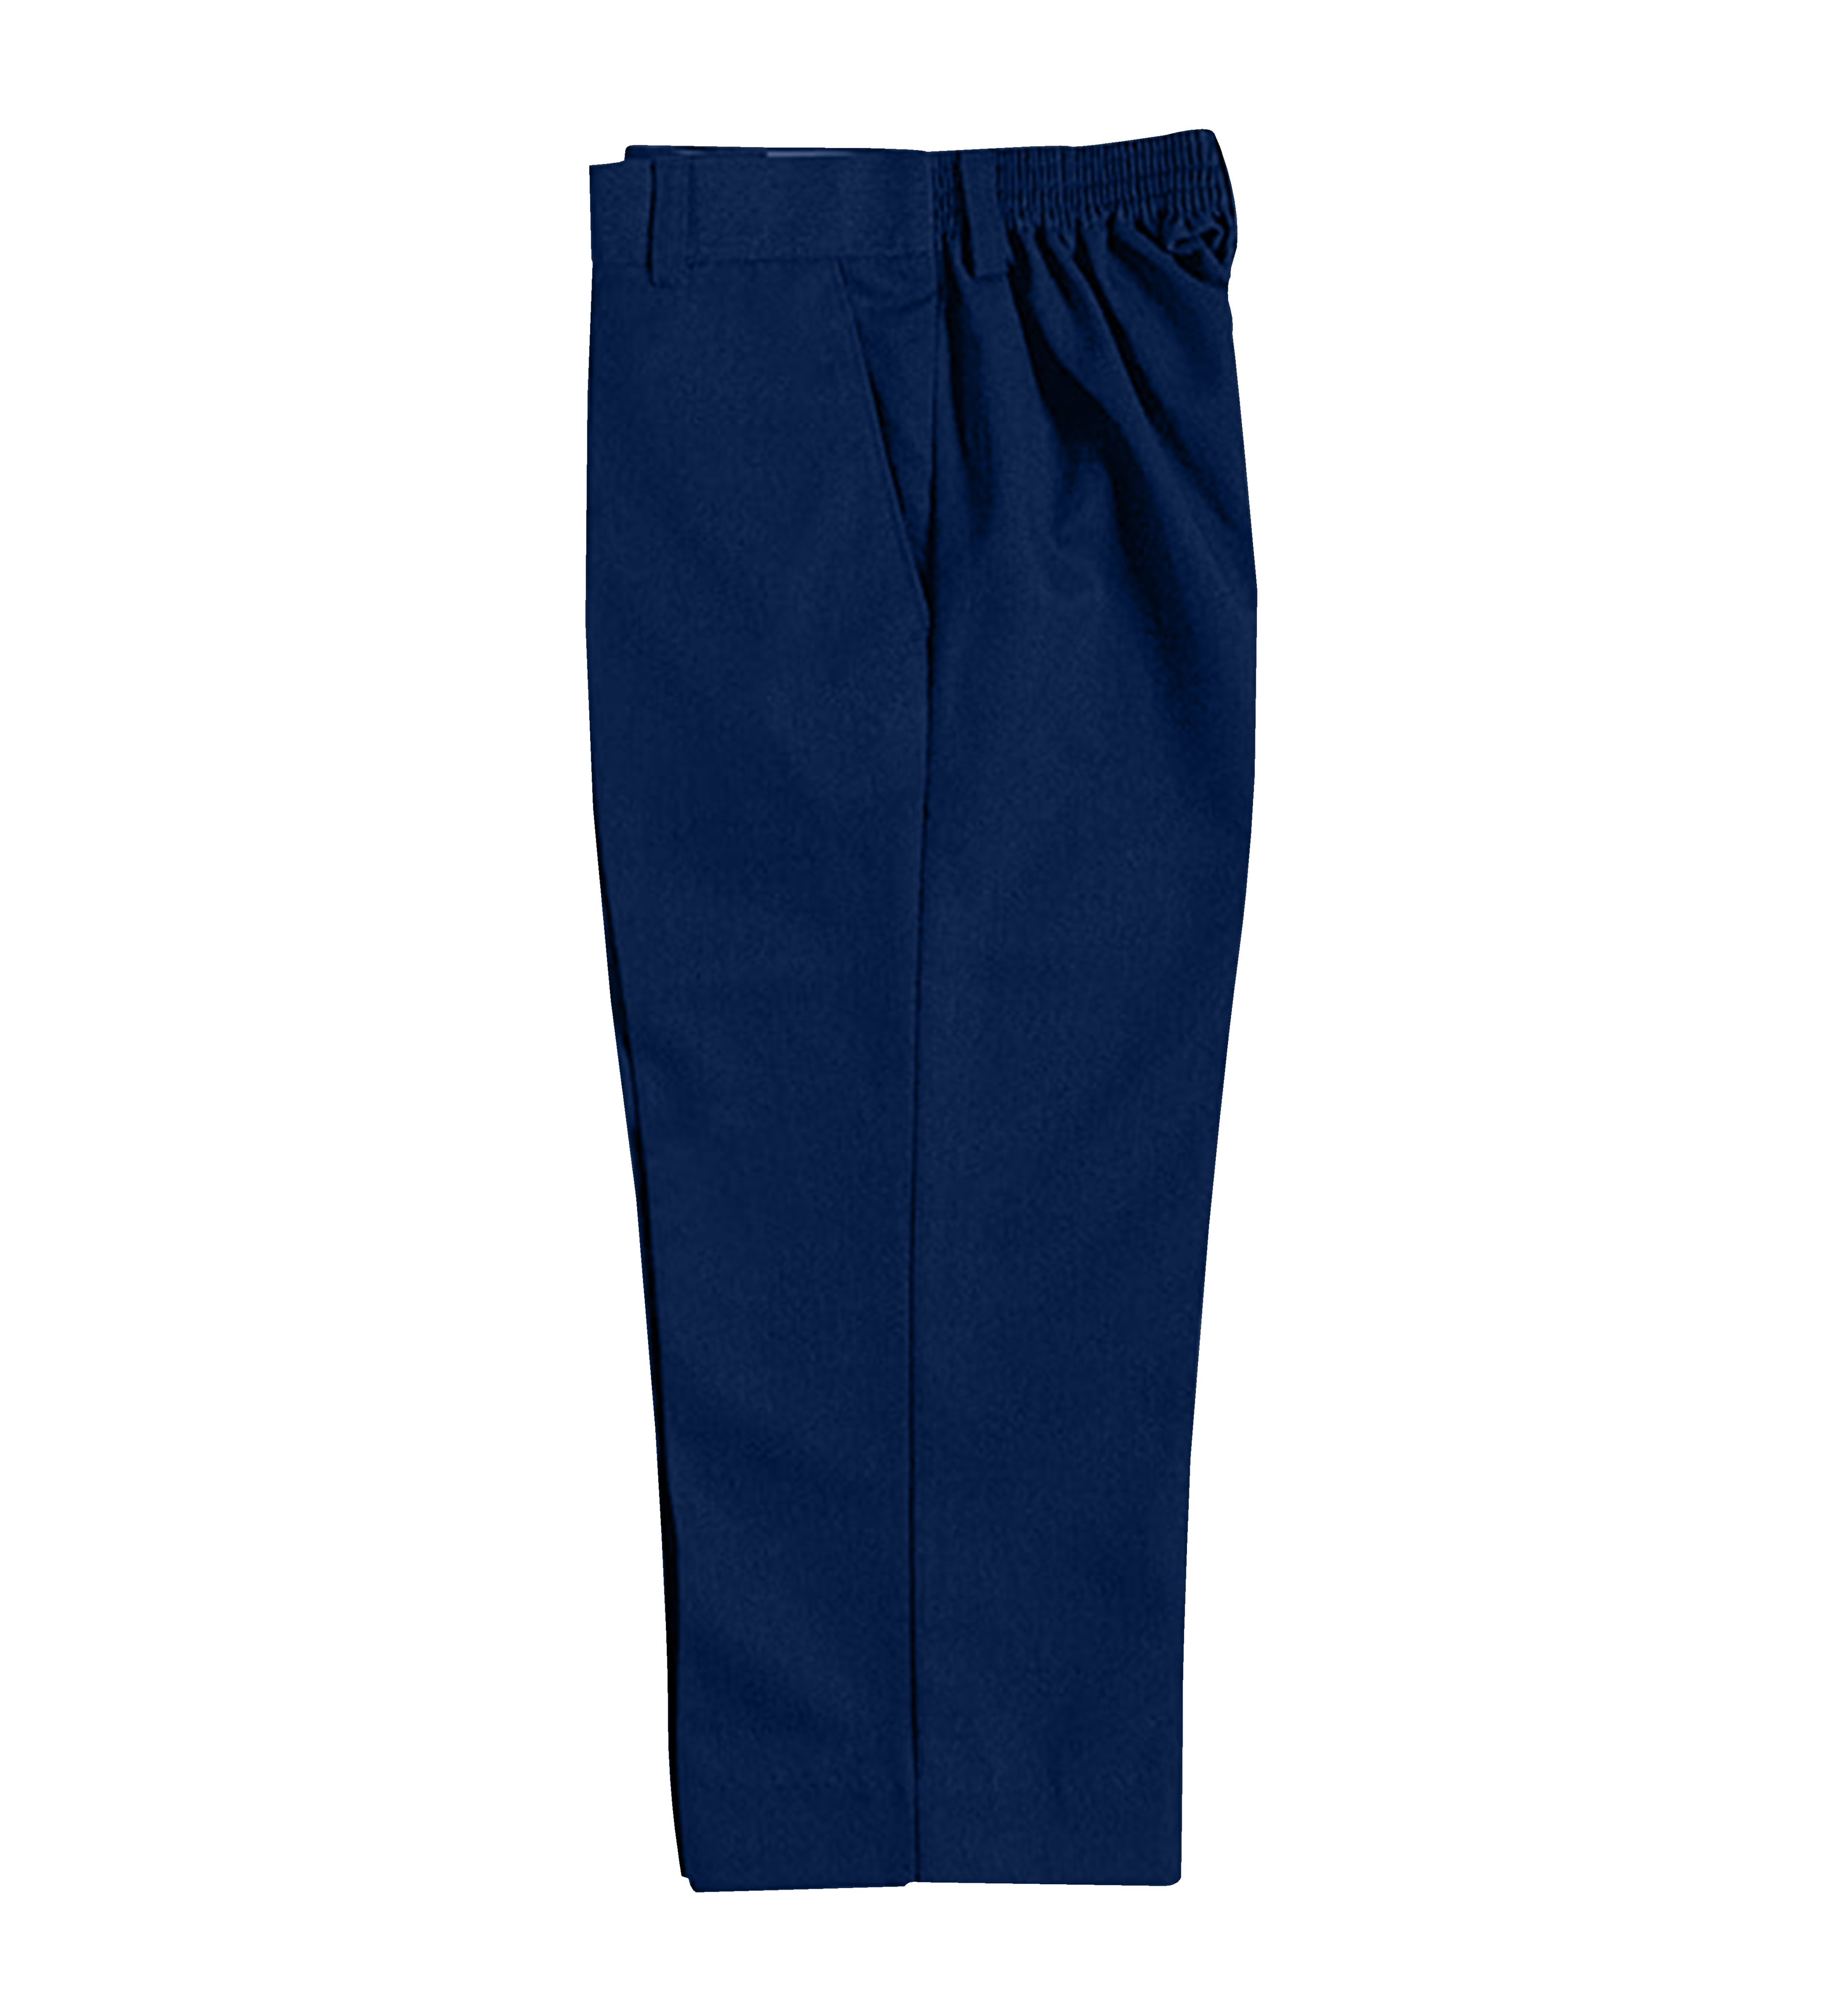 Bahria College Elastic Pants - Youniform